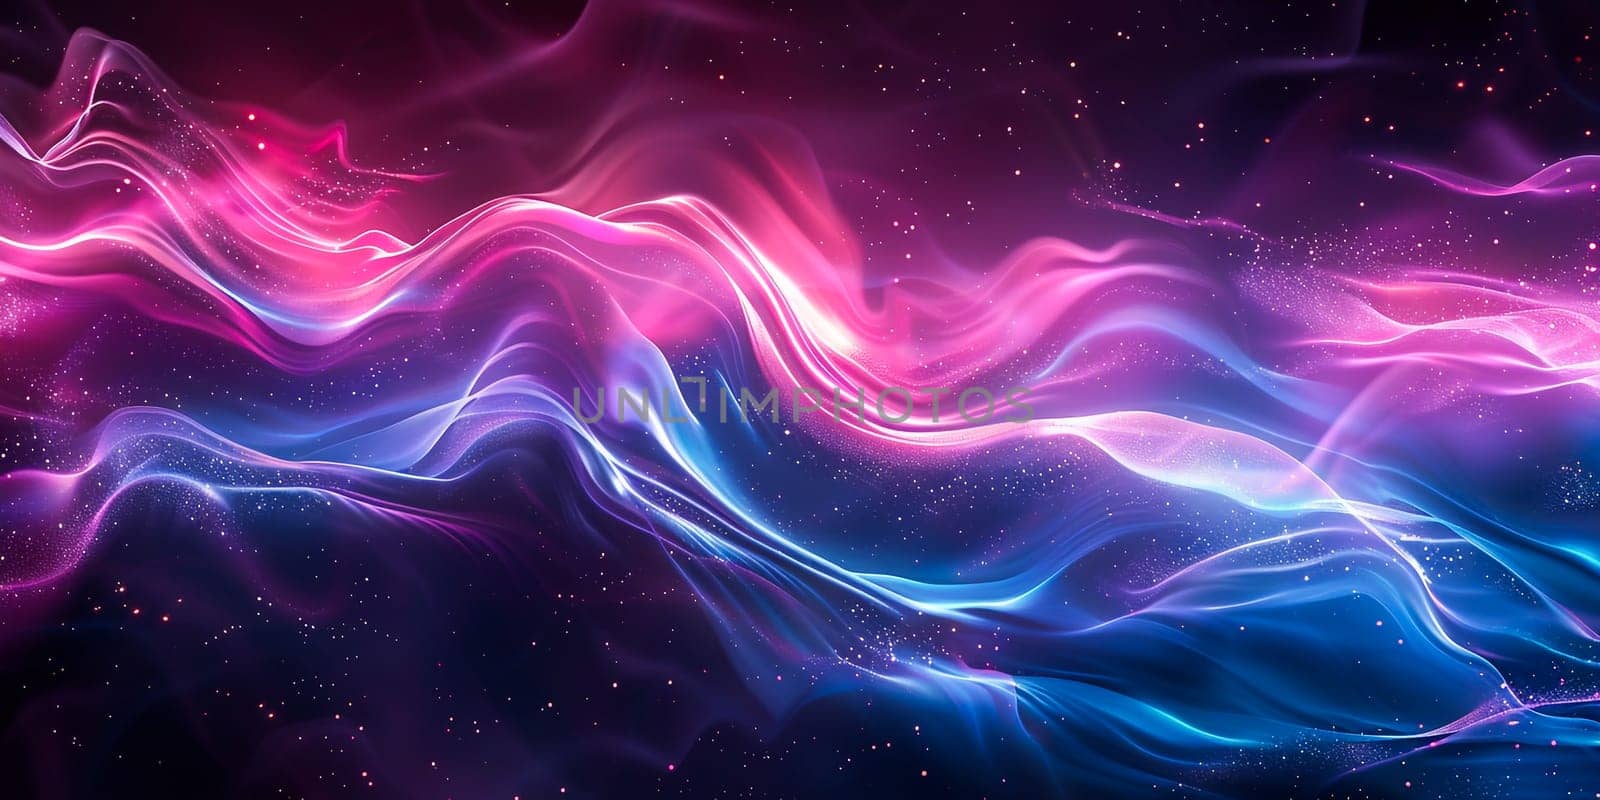 Blue neon purple color liquid waves futuristic background. High quality photo